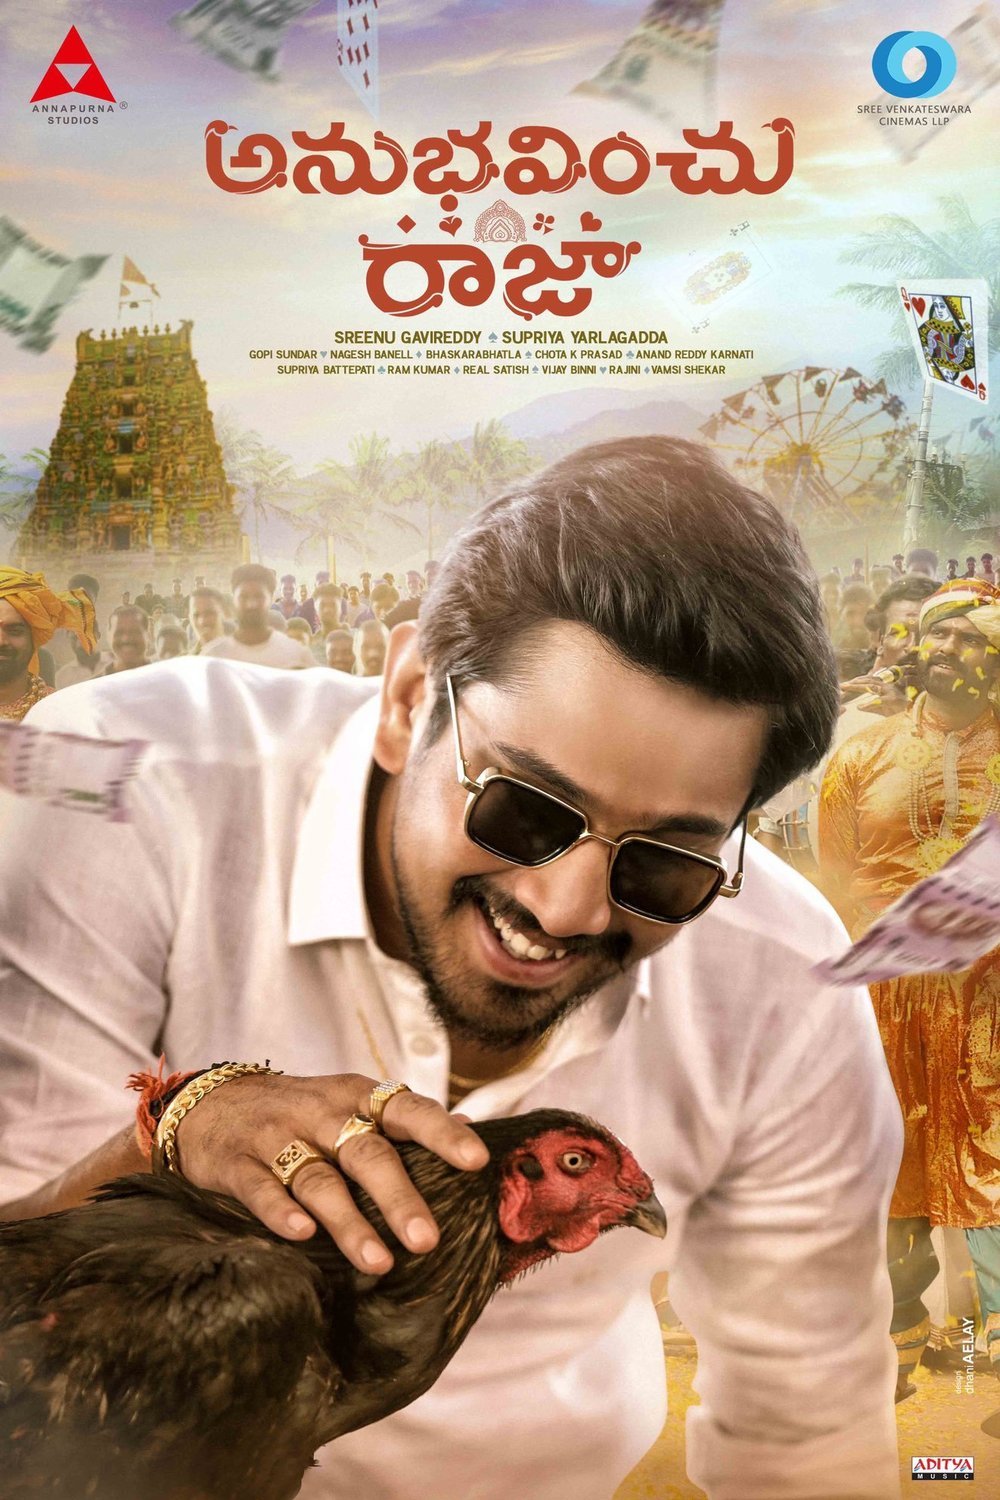 Telugu poster of the movie Anubhavinchu Raja